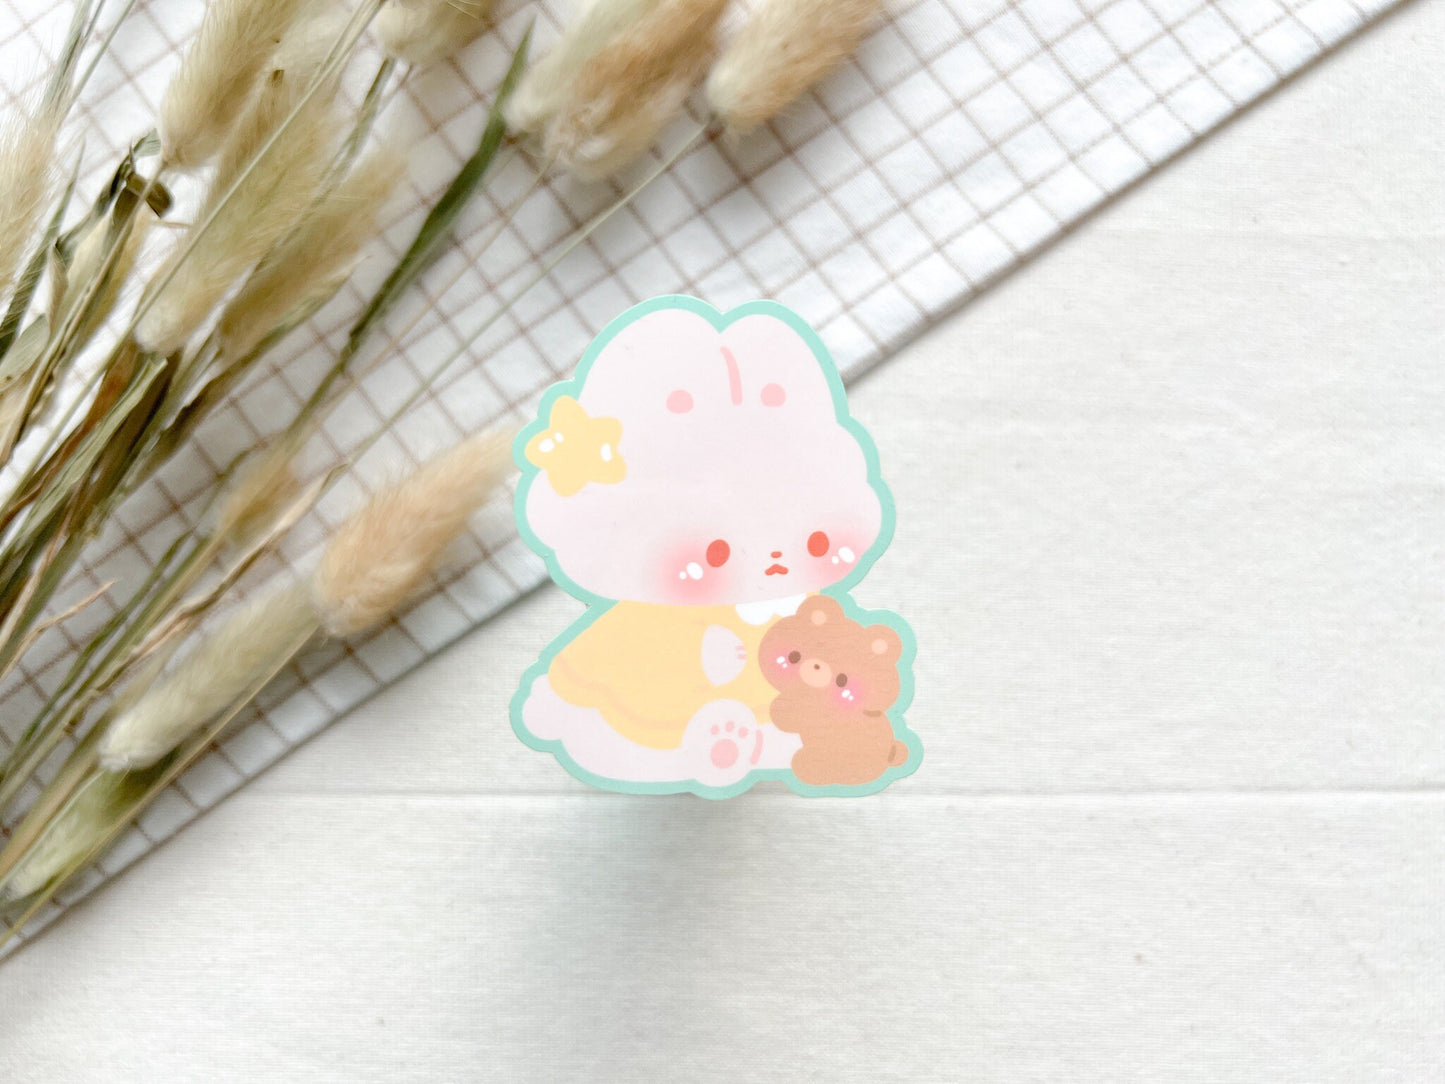 Cute Vinyl Die Cut Sticker Bunny 'Bonbon' Hugging Small Bear - Water Resistant